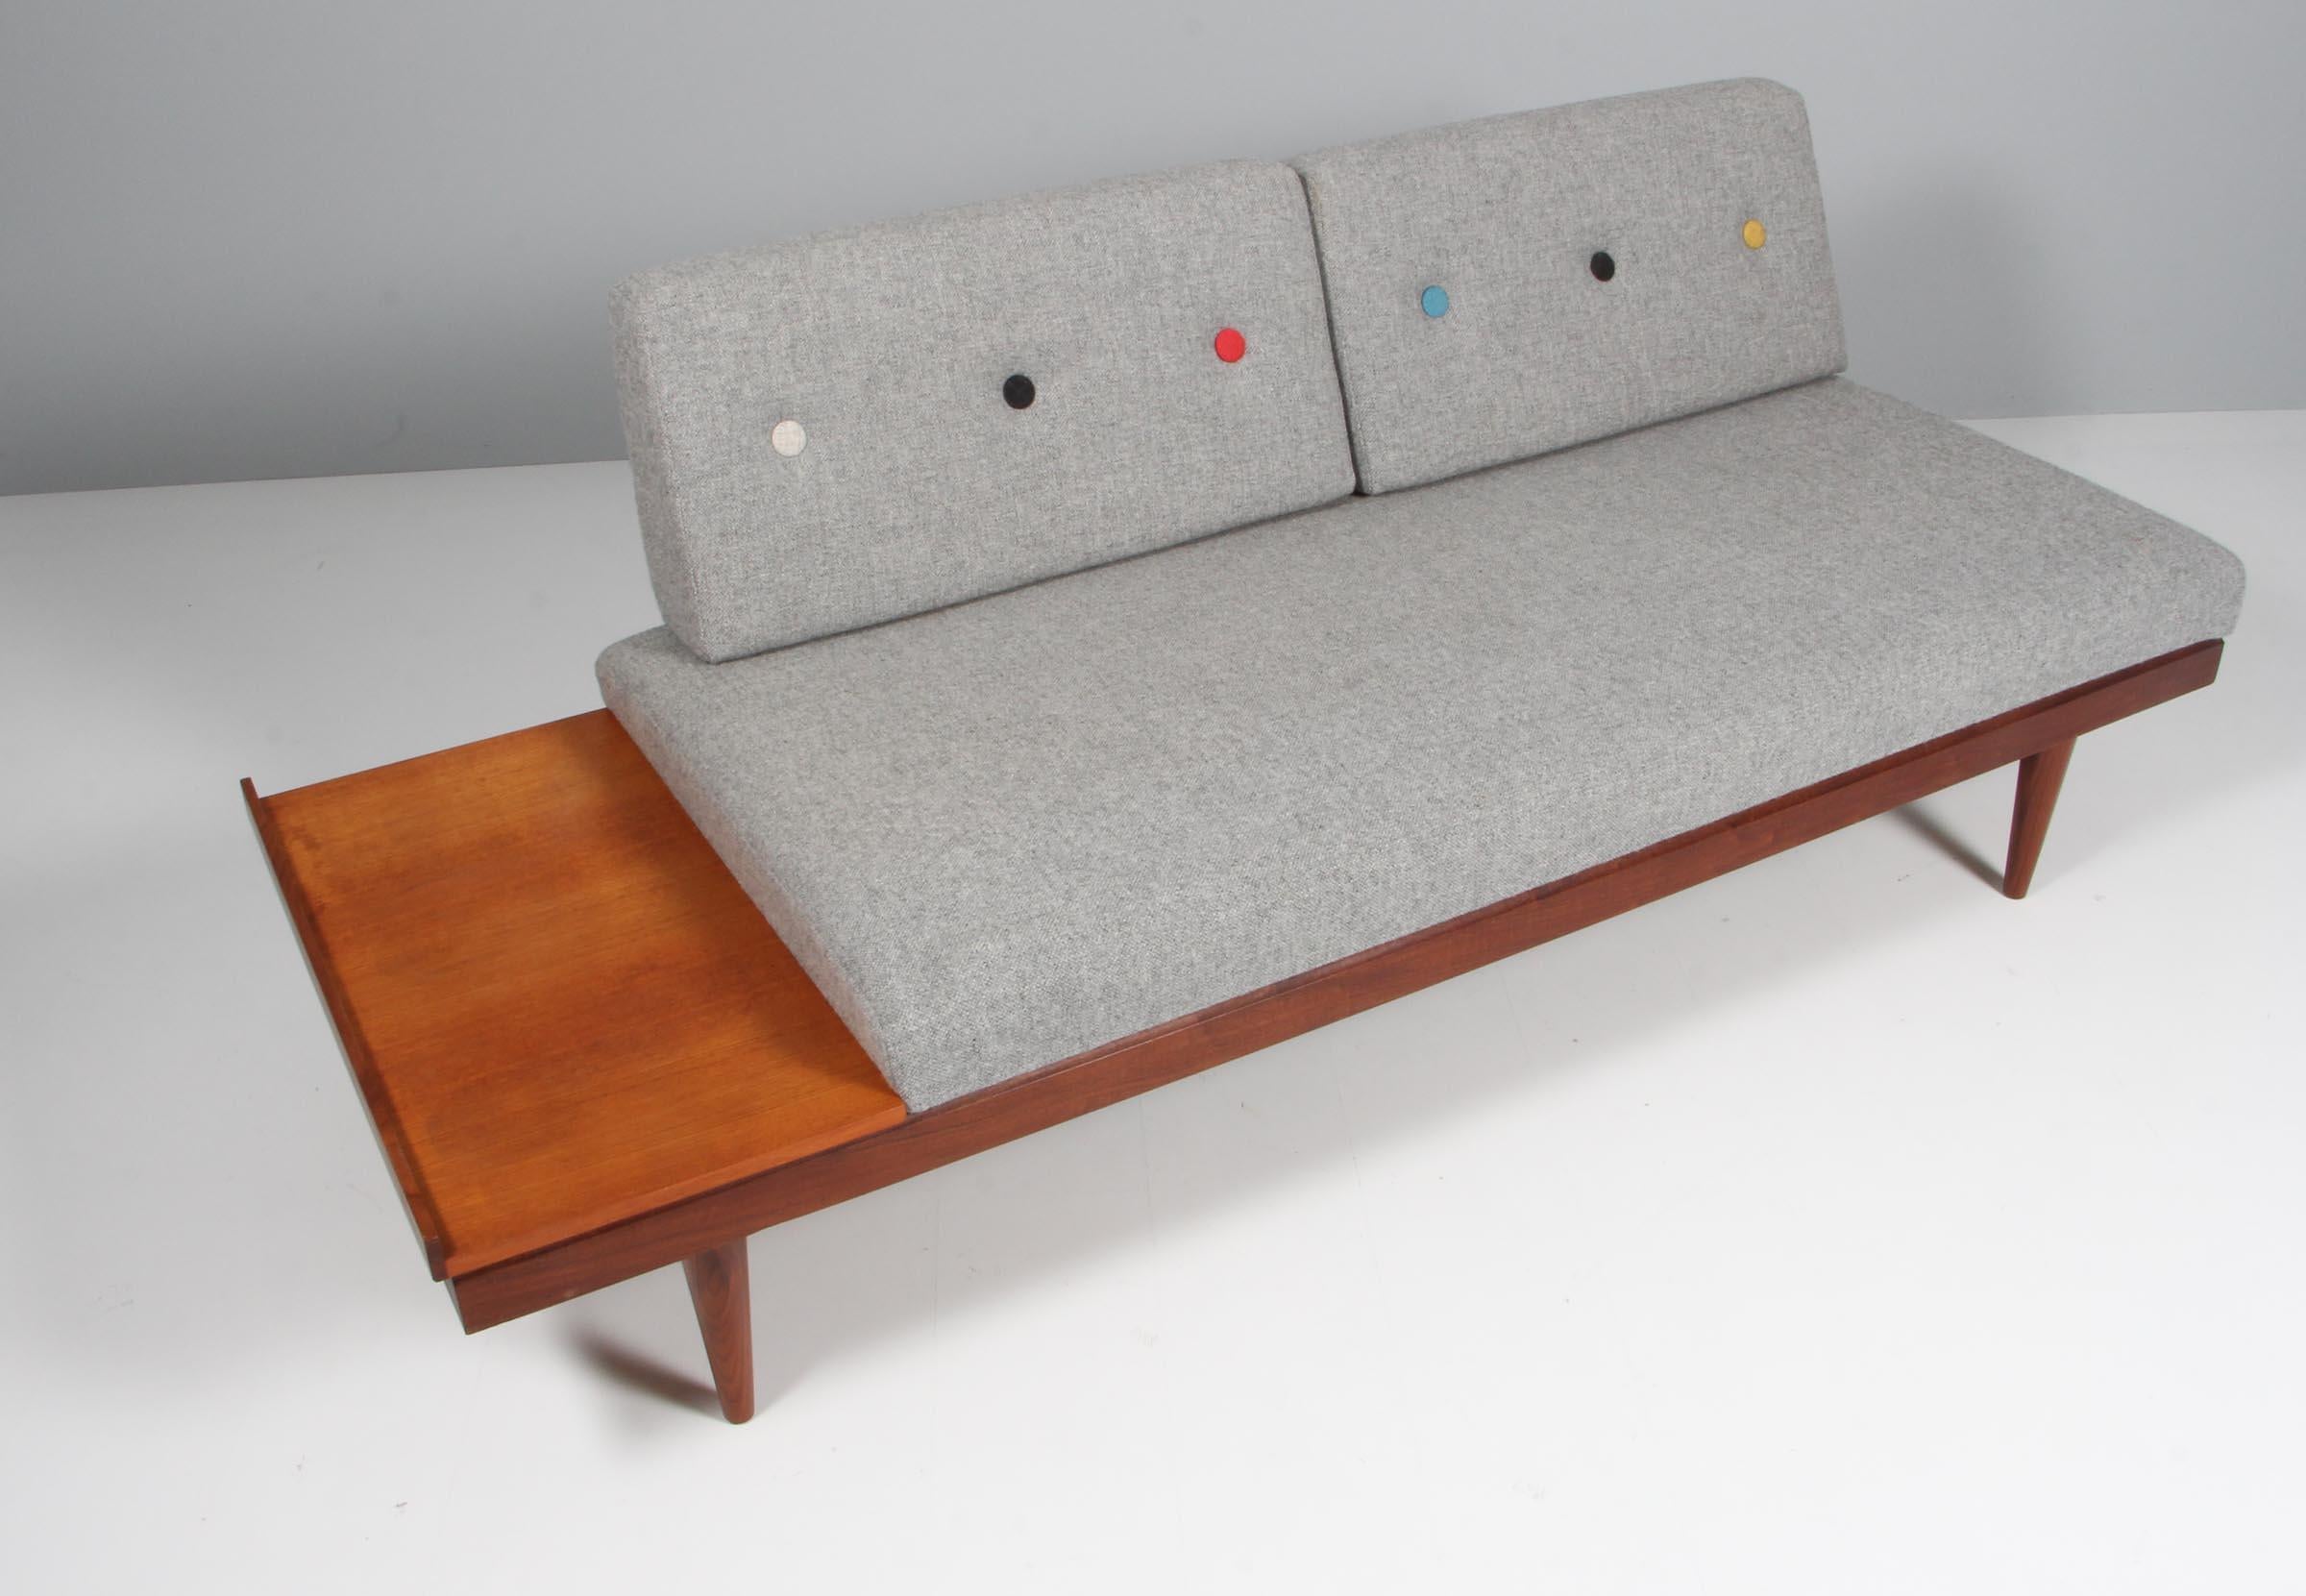 Haldor Vik & Ingmar Relling daybed with tilt function and sidetable function. With frame of teak. Upholstered with Hallingdal Wool from Kvadrat.

Model Svanette, made by Ekorness.